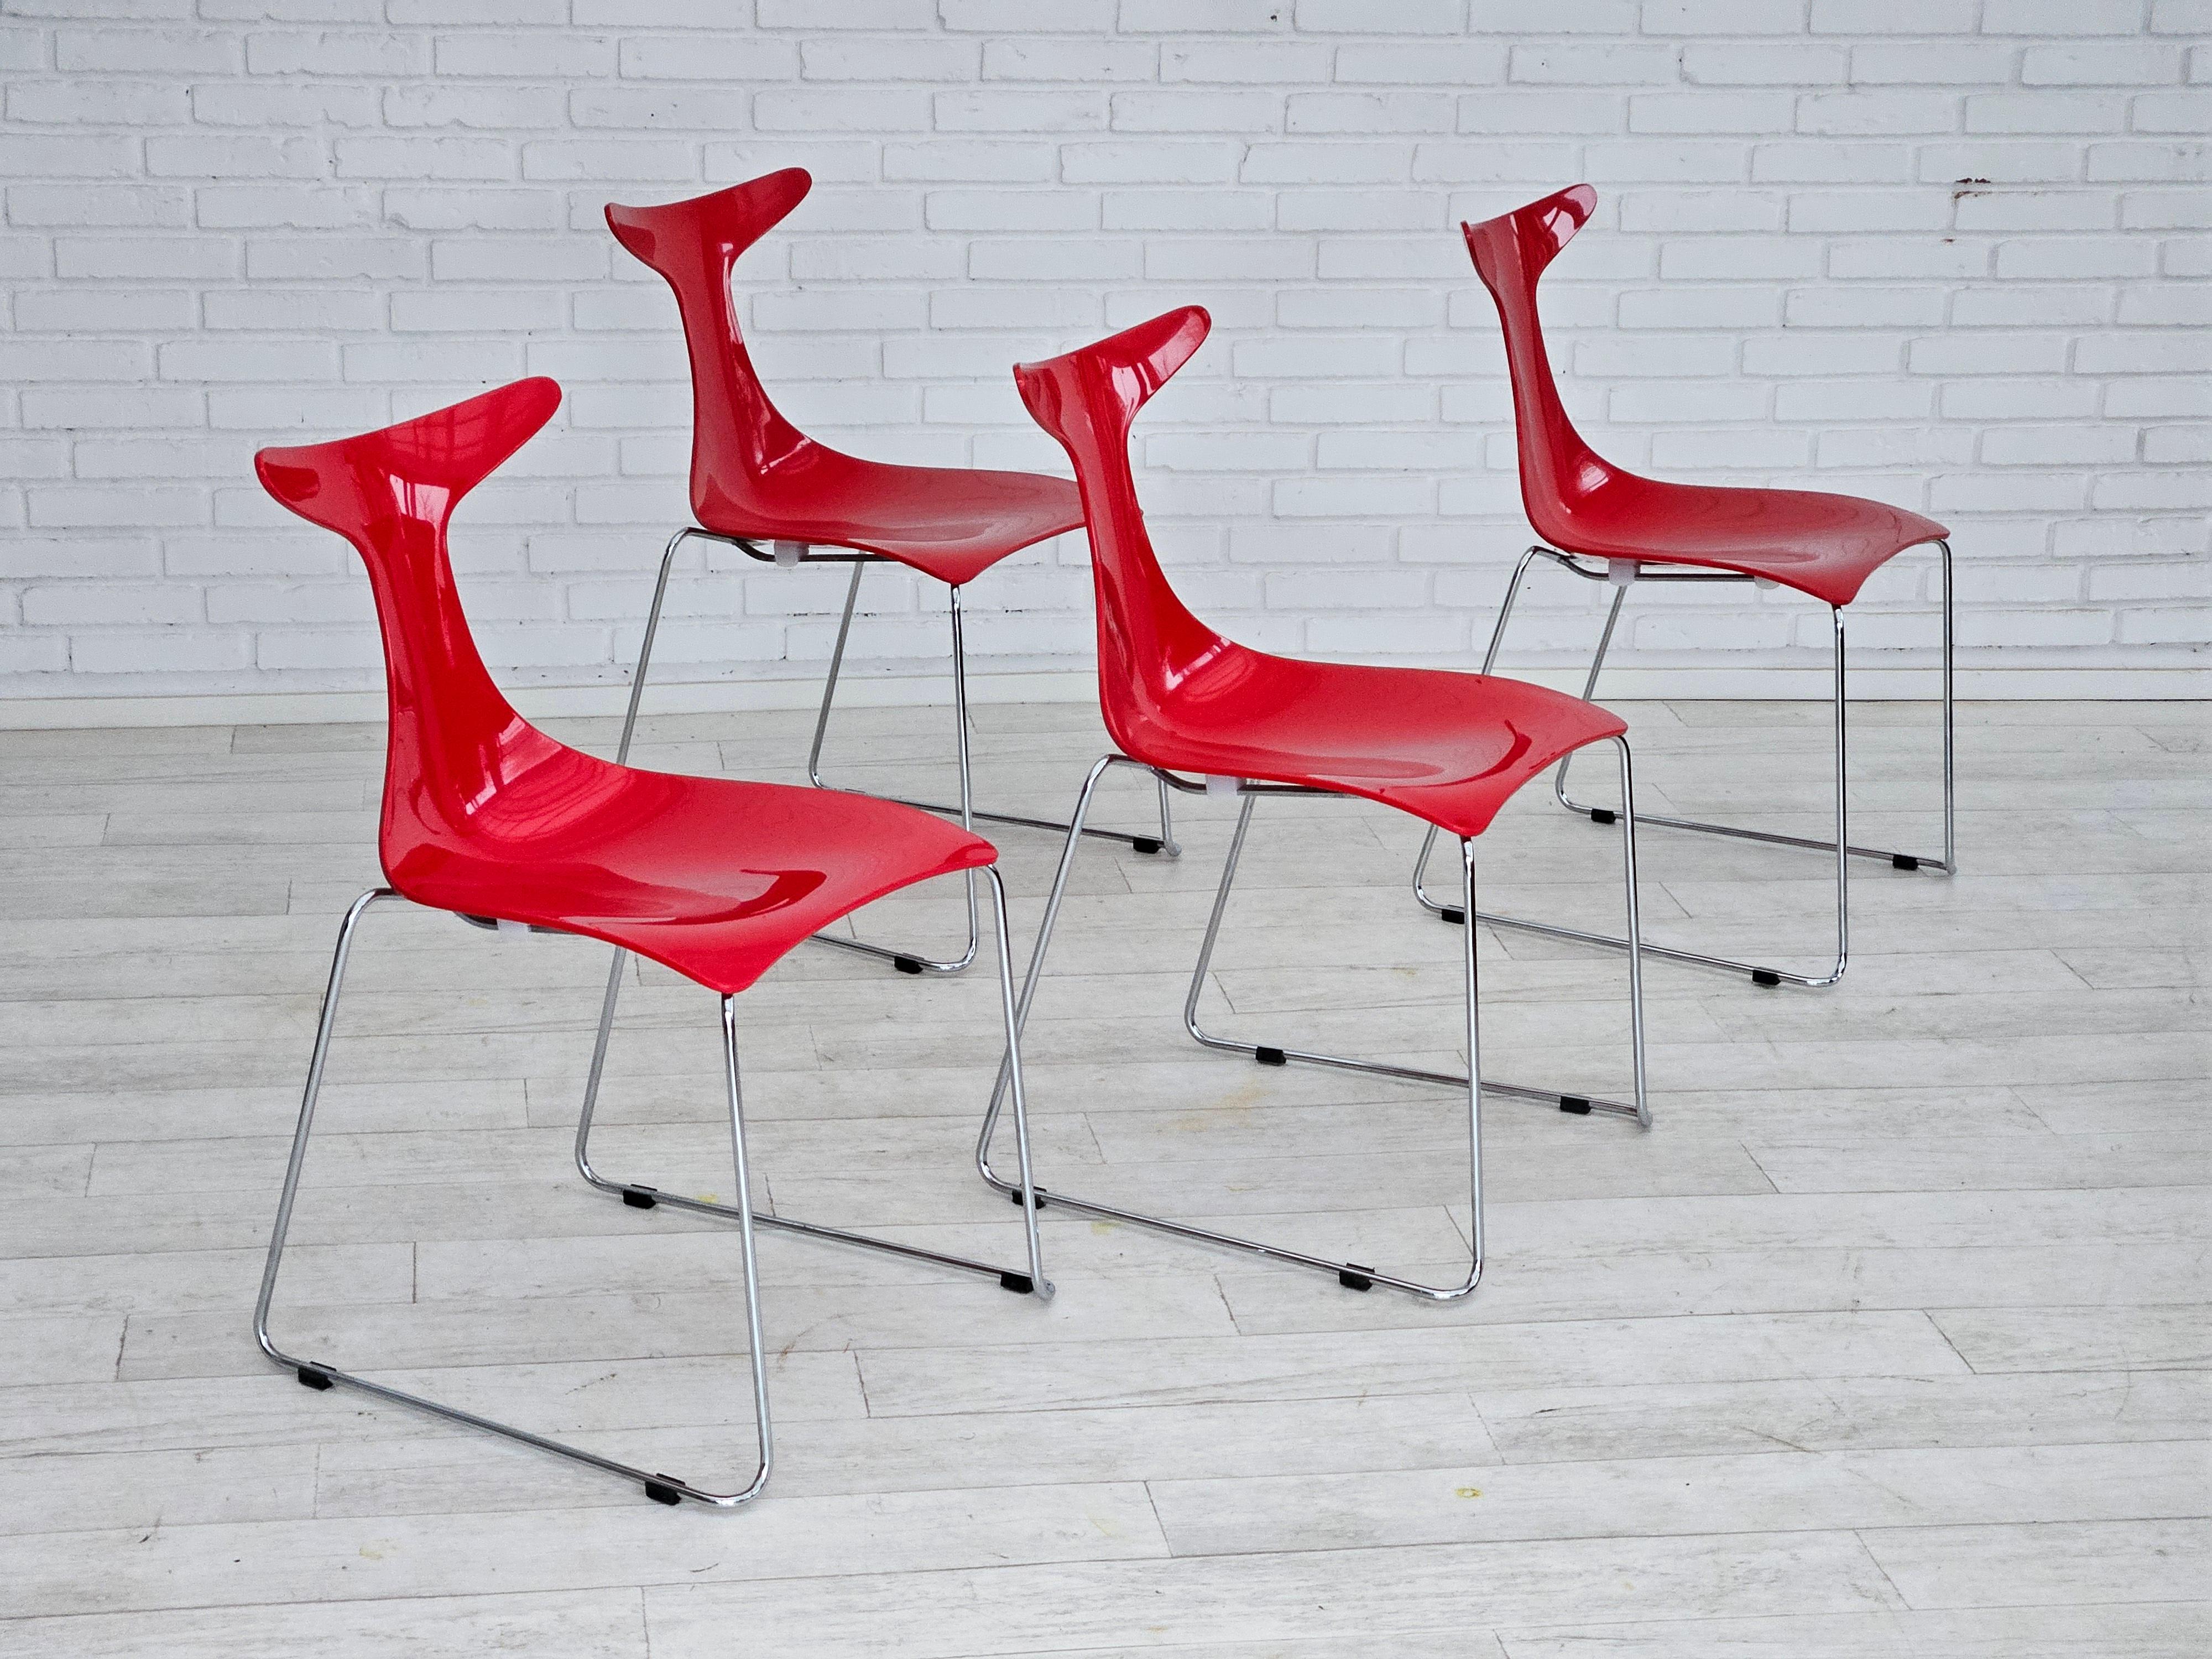 1990s, Italian design by Gino Carollo. Set of 4 chairs model 